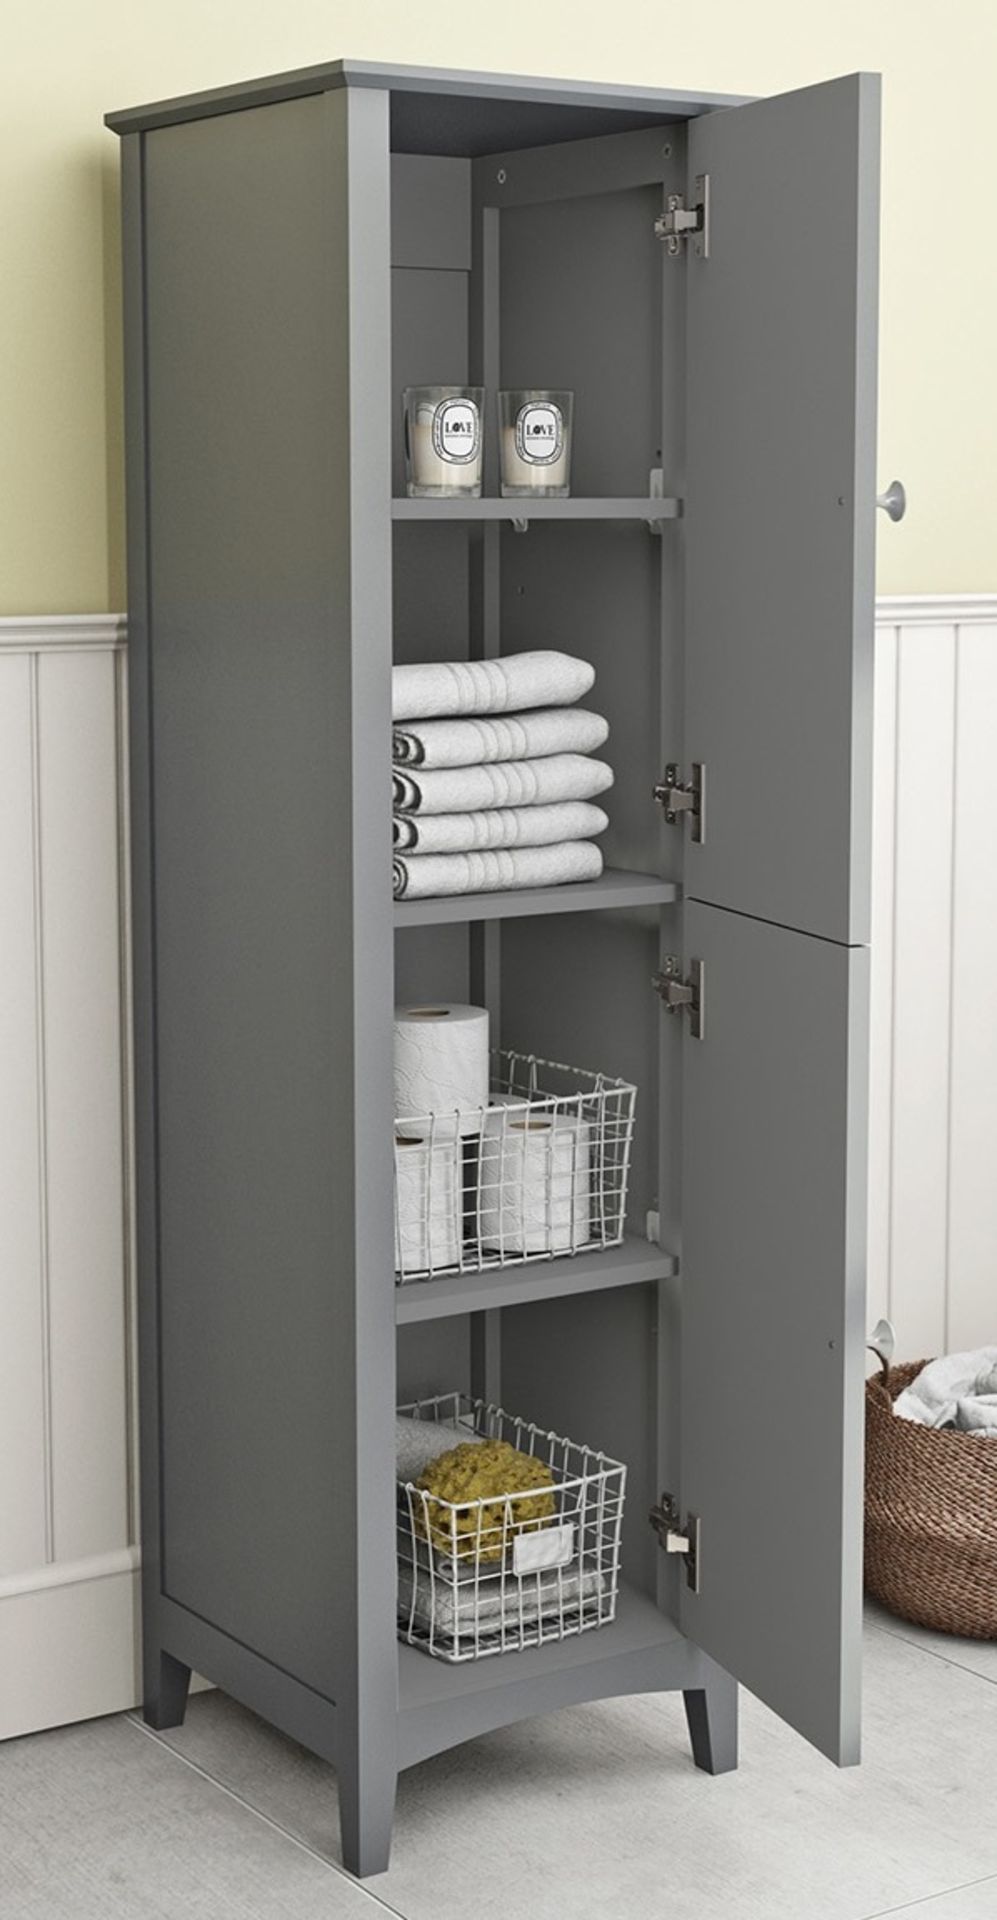 1 x Camberley Tall Bathroom Storage Unit - H1400xW400xD400mm - Contemporary Grey Finish - Unused - Image 5 of 5